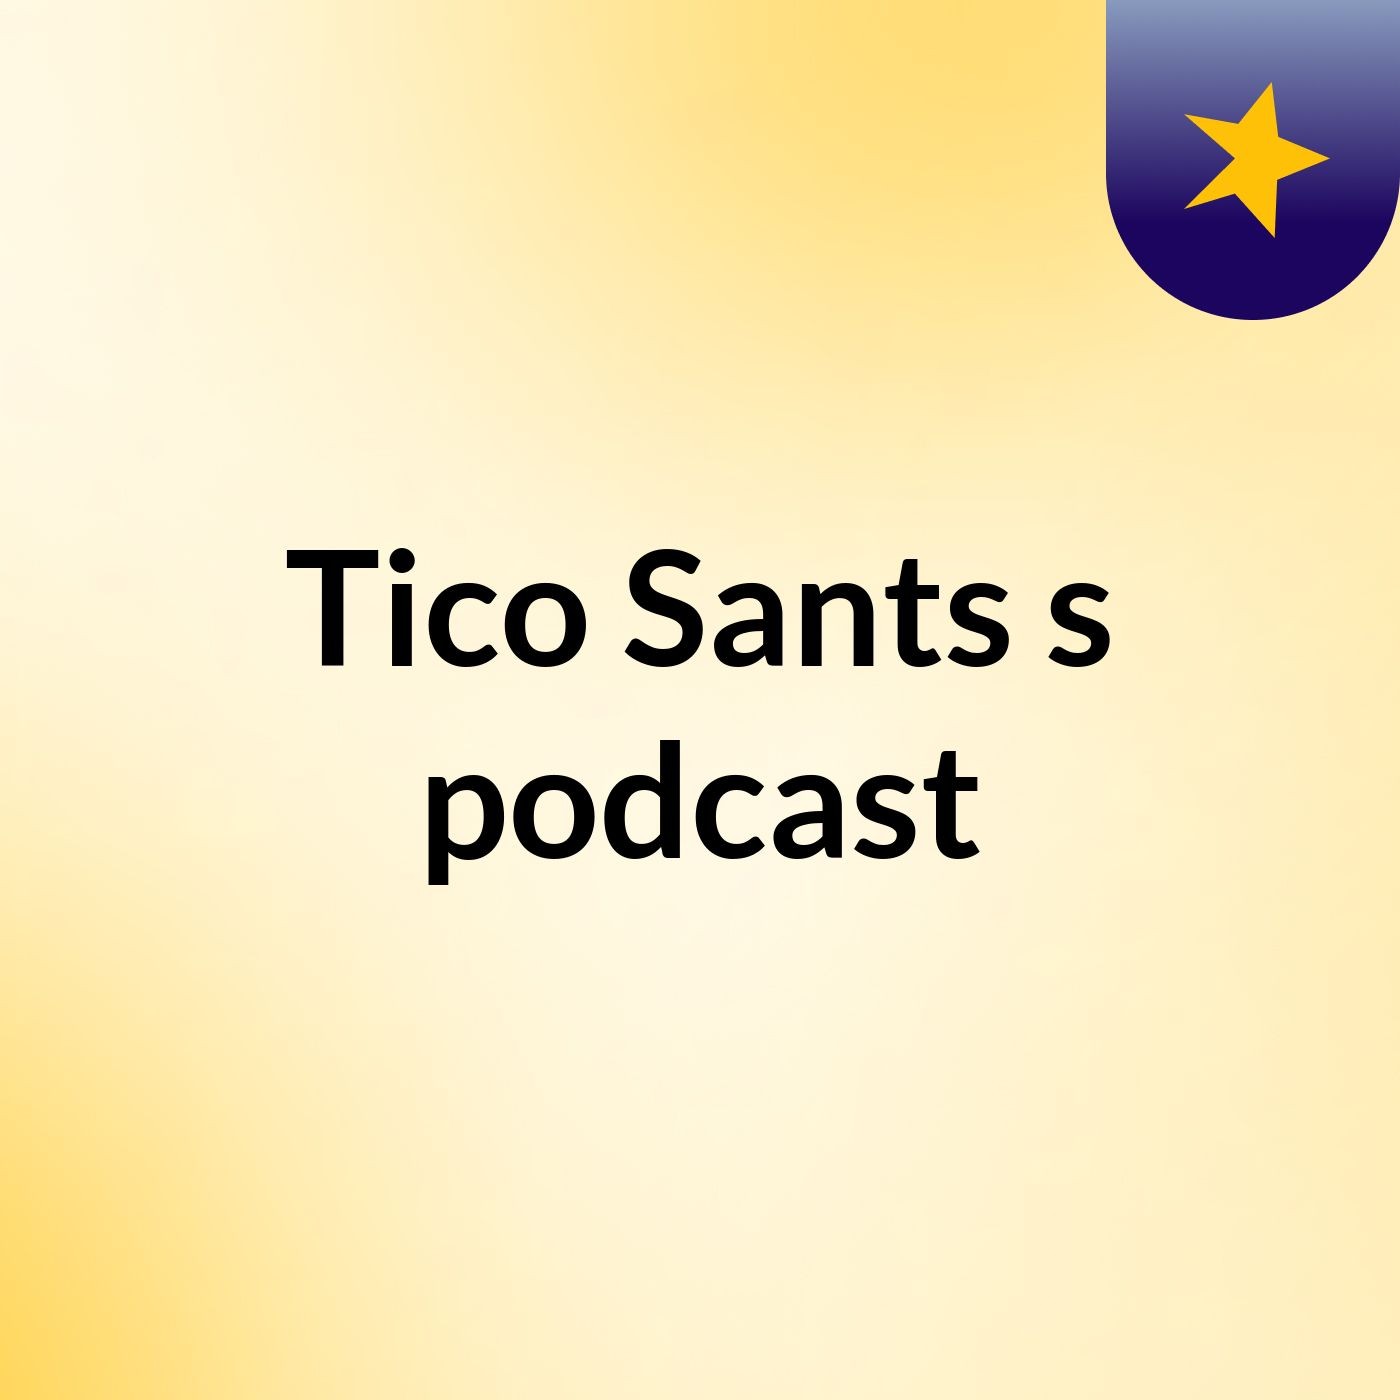 Tico Sants's podcast